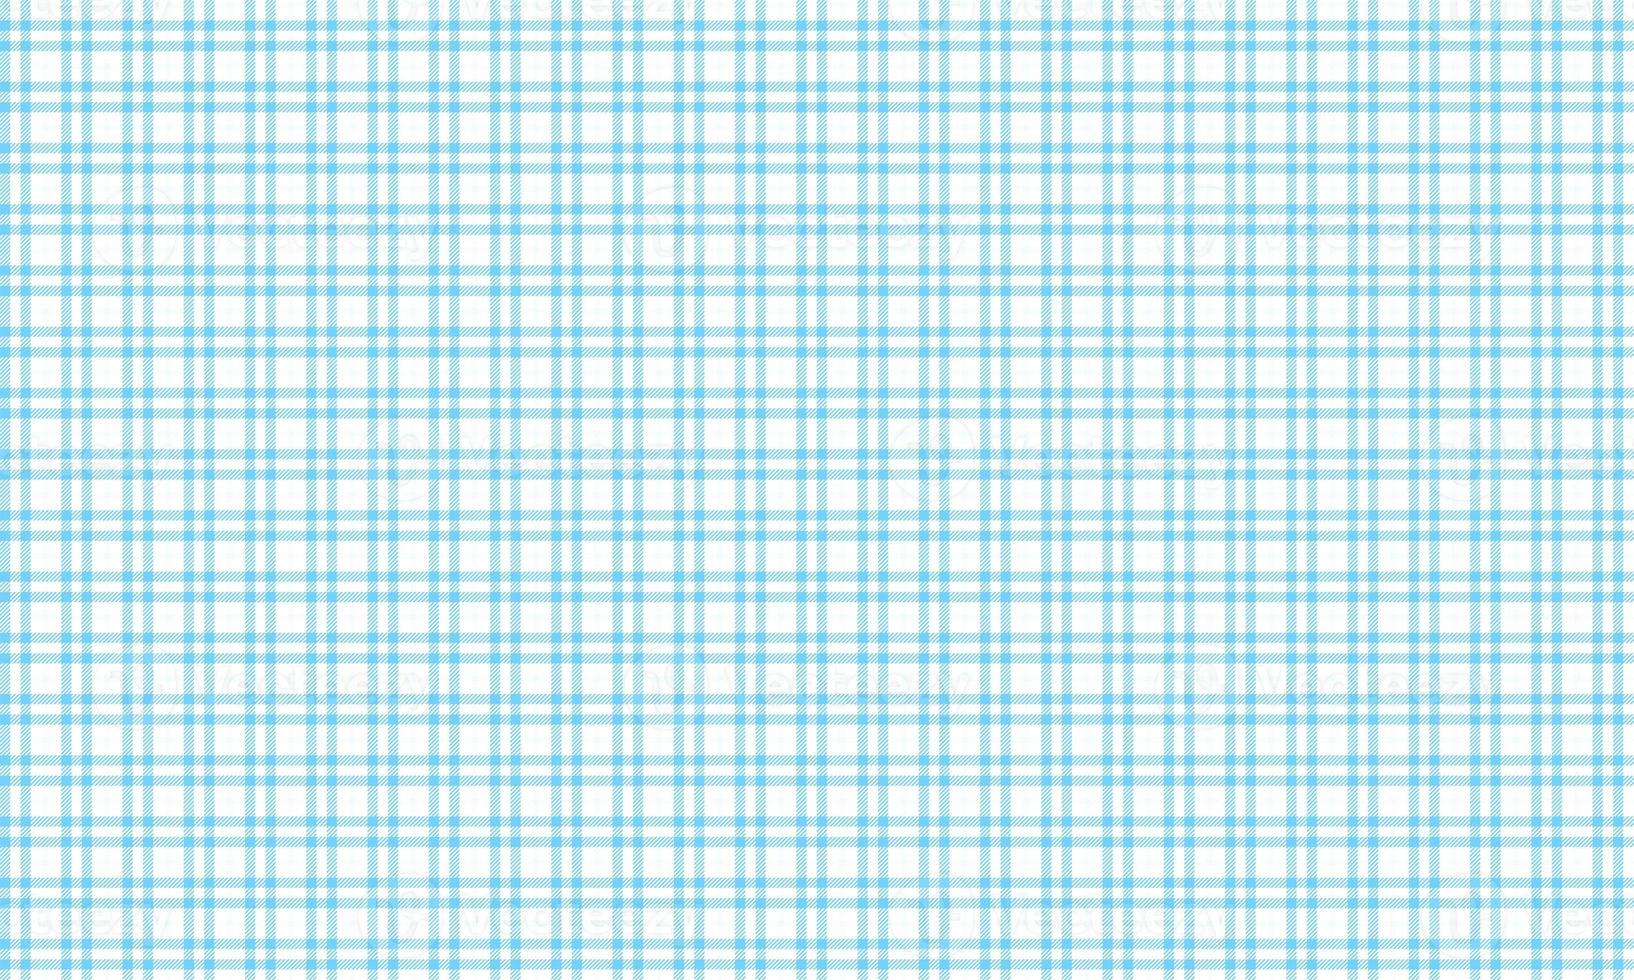 Turquoise blue seamless plaid pattern photo